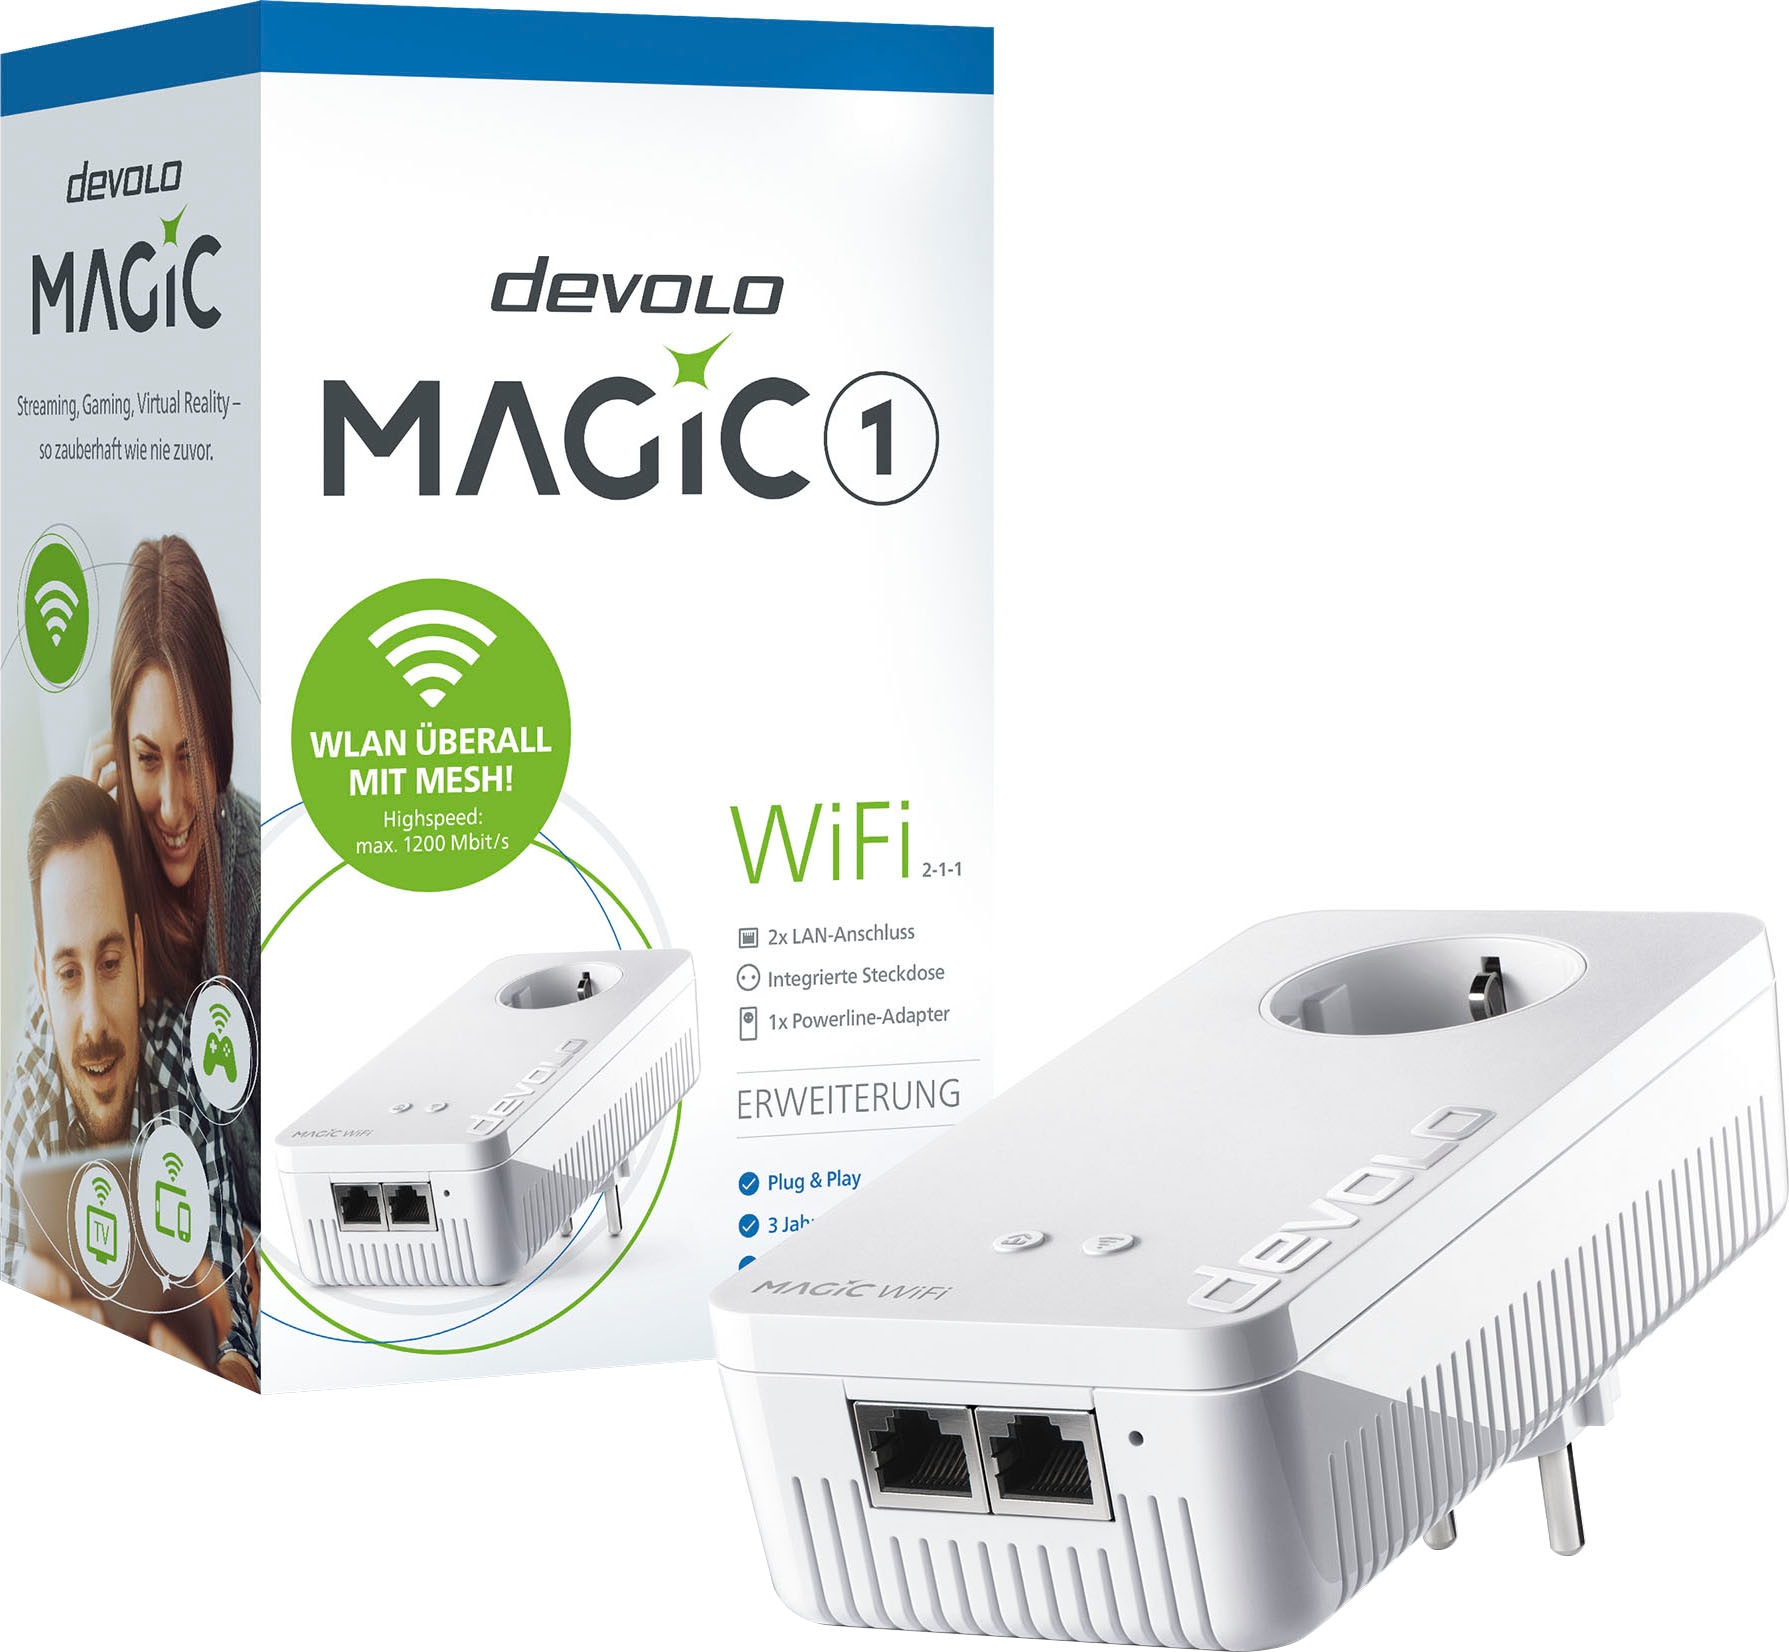 1 ac OTTO (1200Mbit, + DEVOLO kaufen bei Mesh)« jetzt »Magic WLAN, WLAN-Router Ergänzung Powerline LAN, WiFi 2x